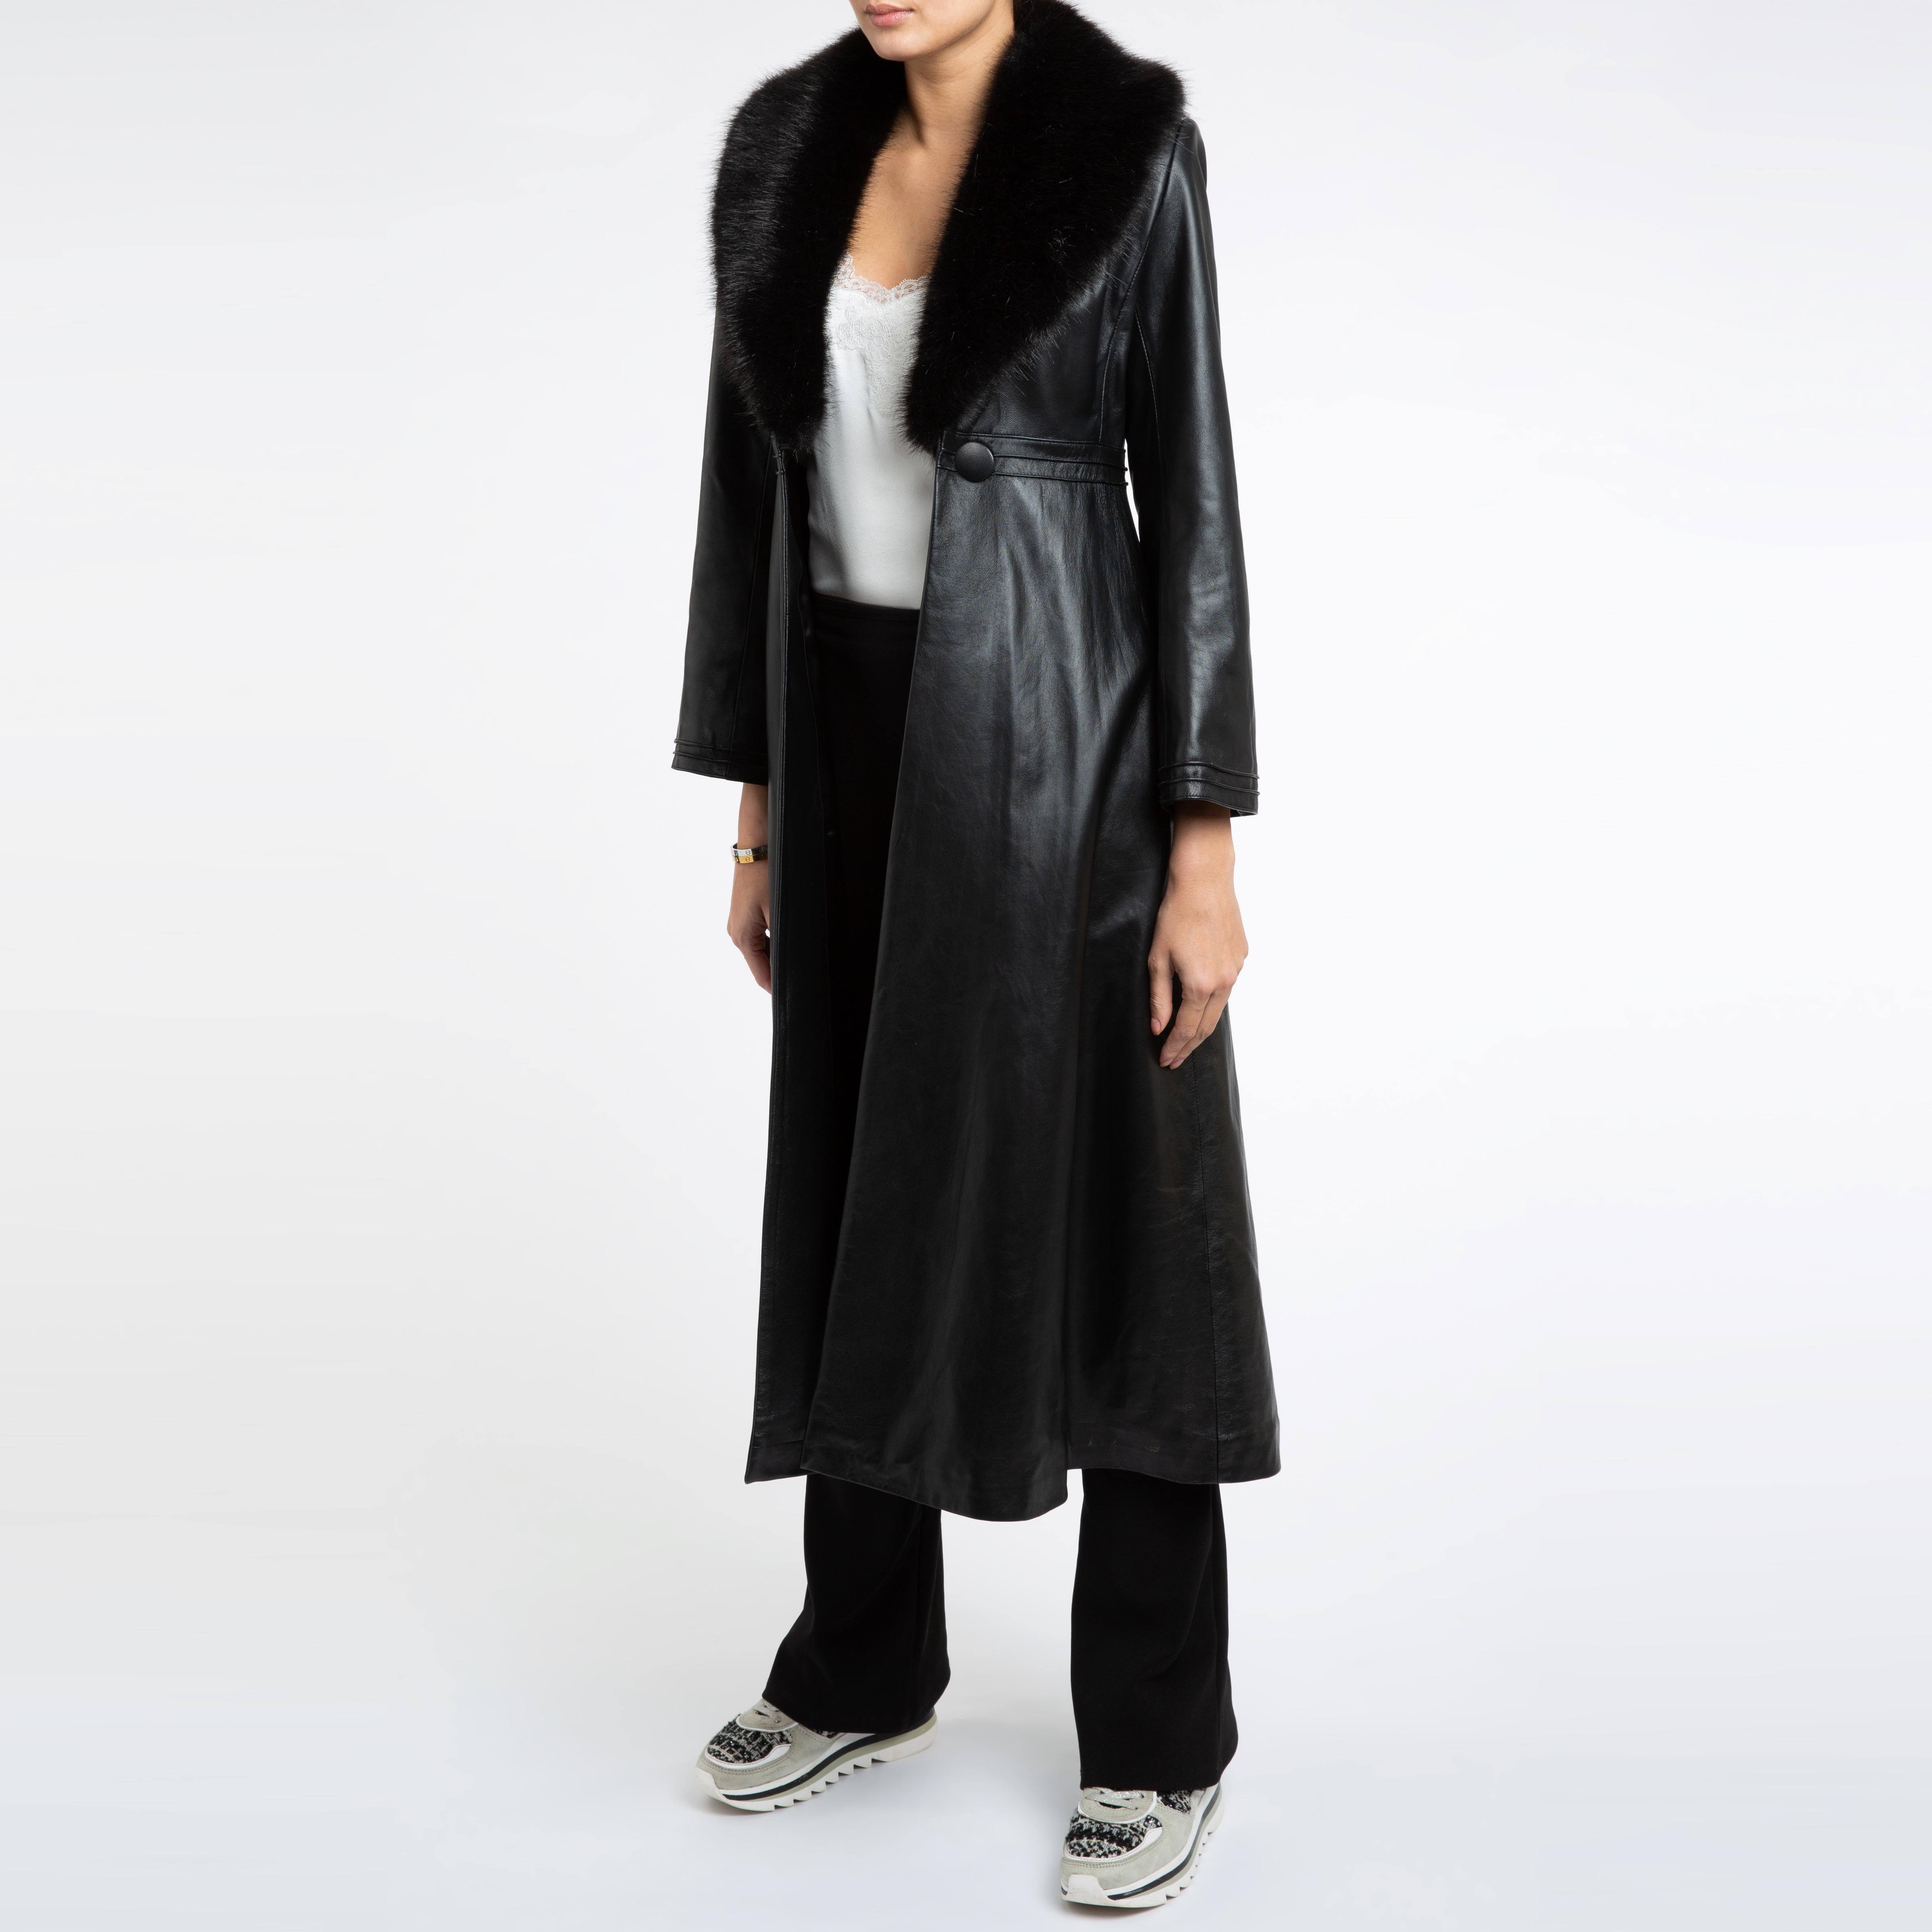 Verheyen London Edward Leather Coat with Faux Fur Collar in Black - Size uk 10 For Sale 1